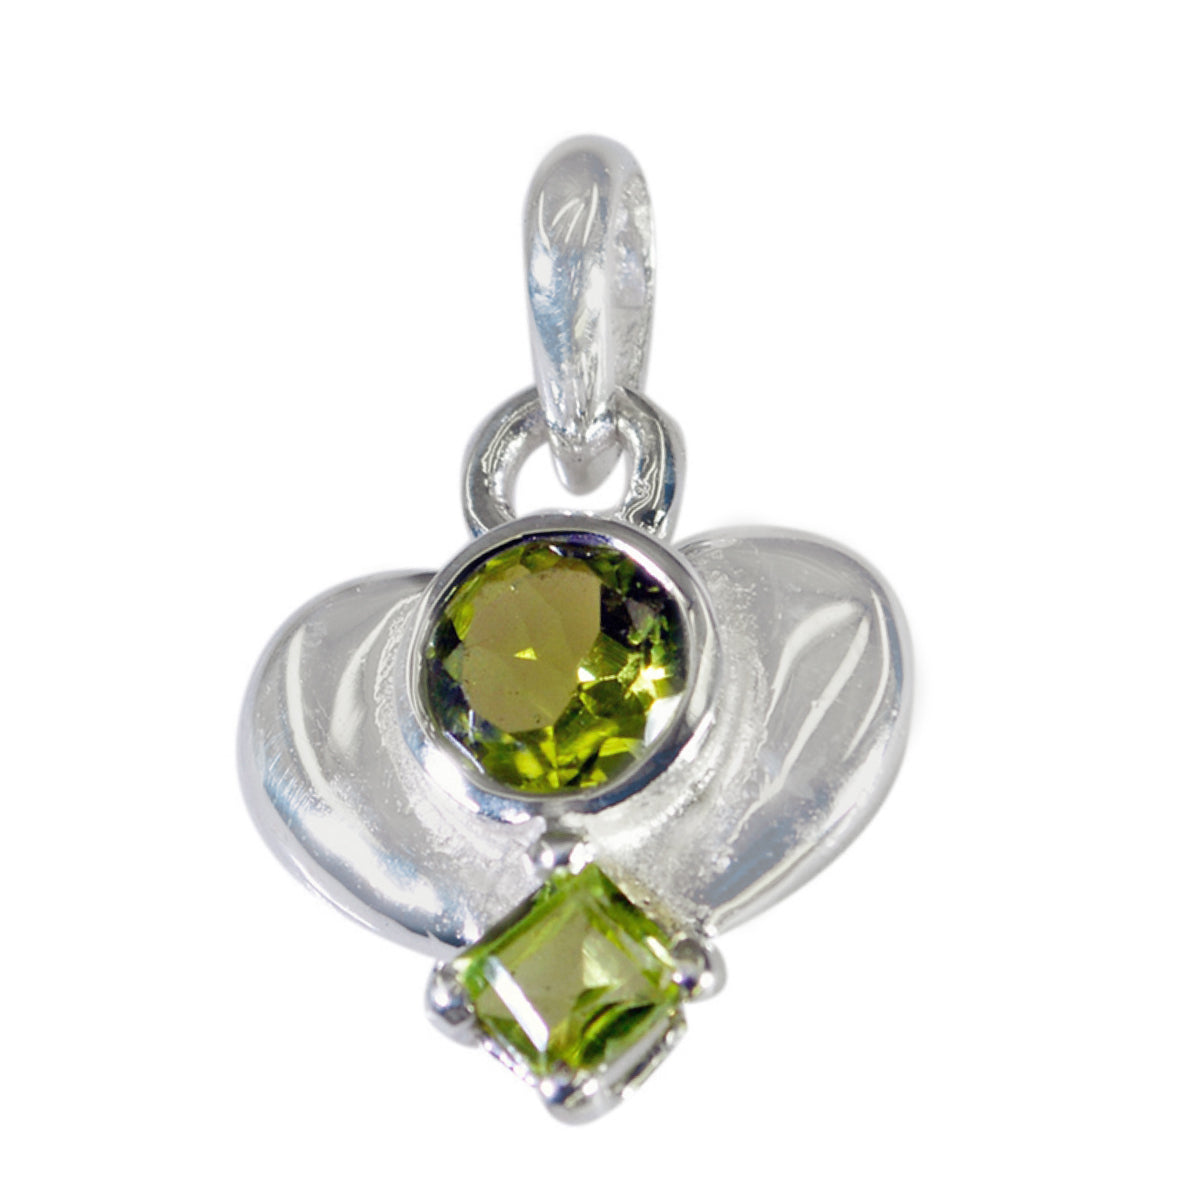 Riyo beauteous gems colgante de plata maciza con peridoto verde multifacetado, regalo para aniversario